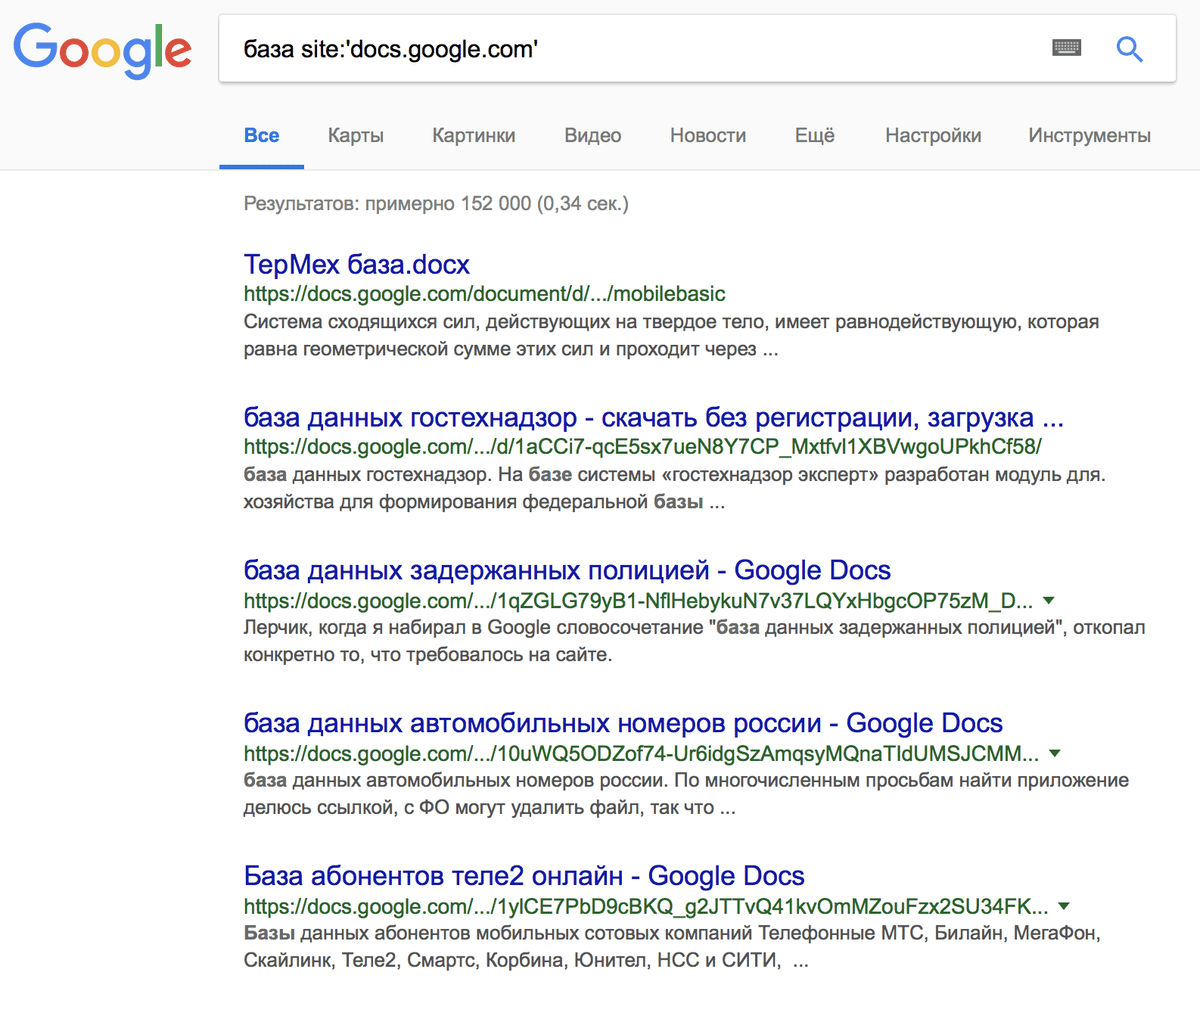 Гугл индексирует, но странно. Похоже на развод и рекламу